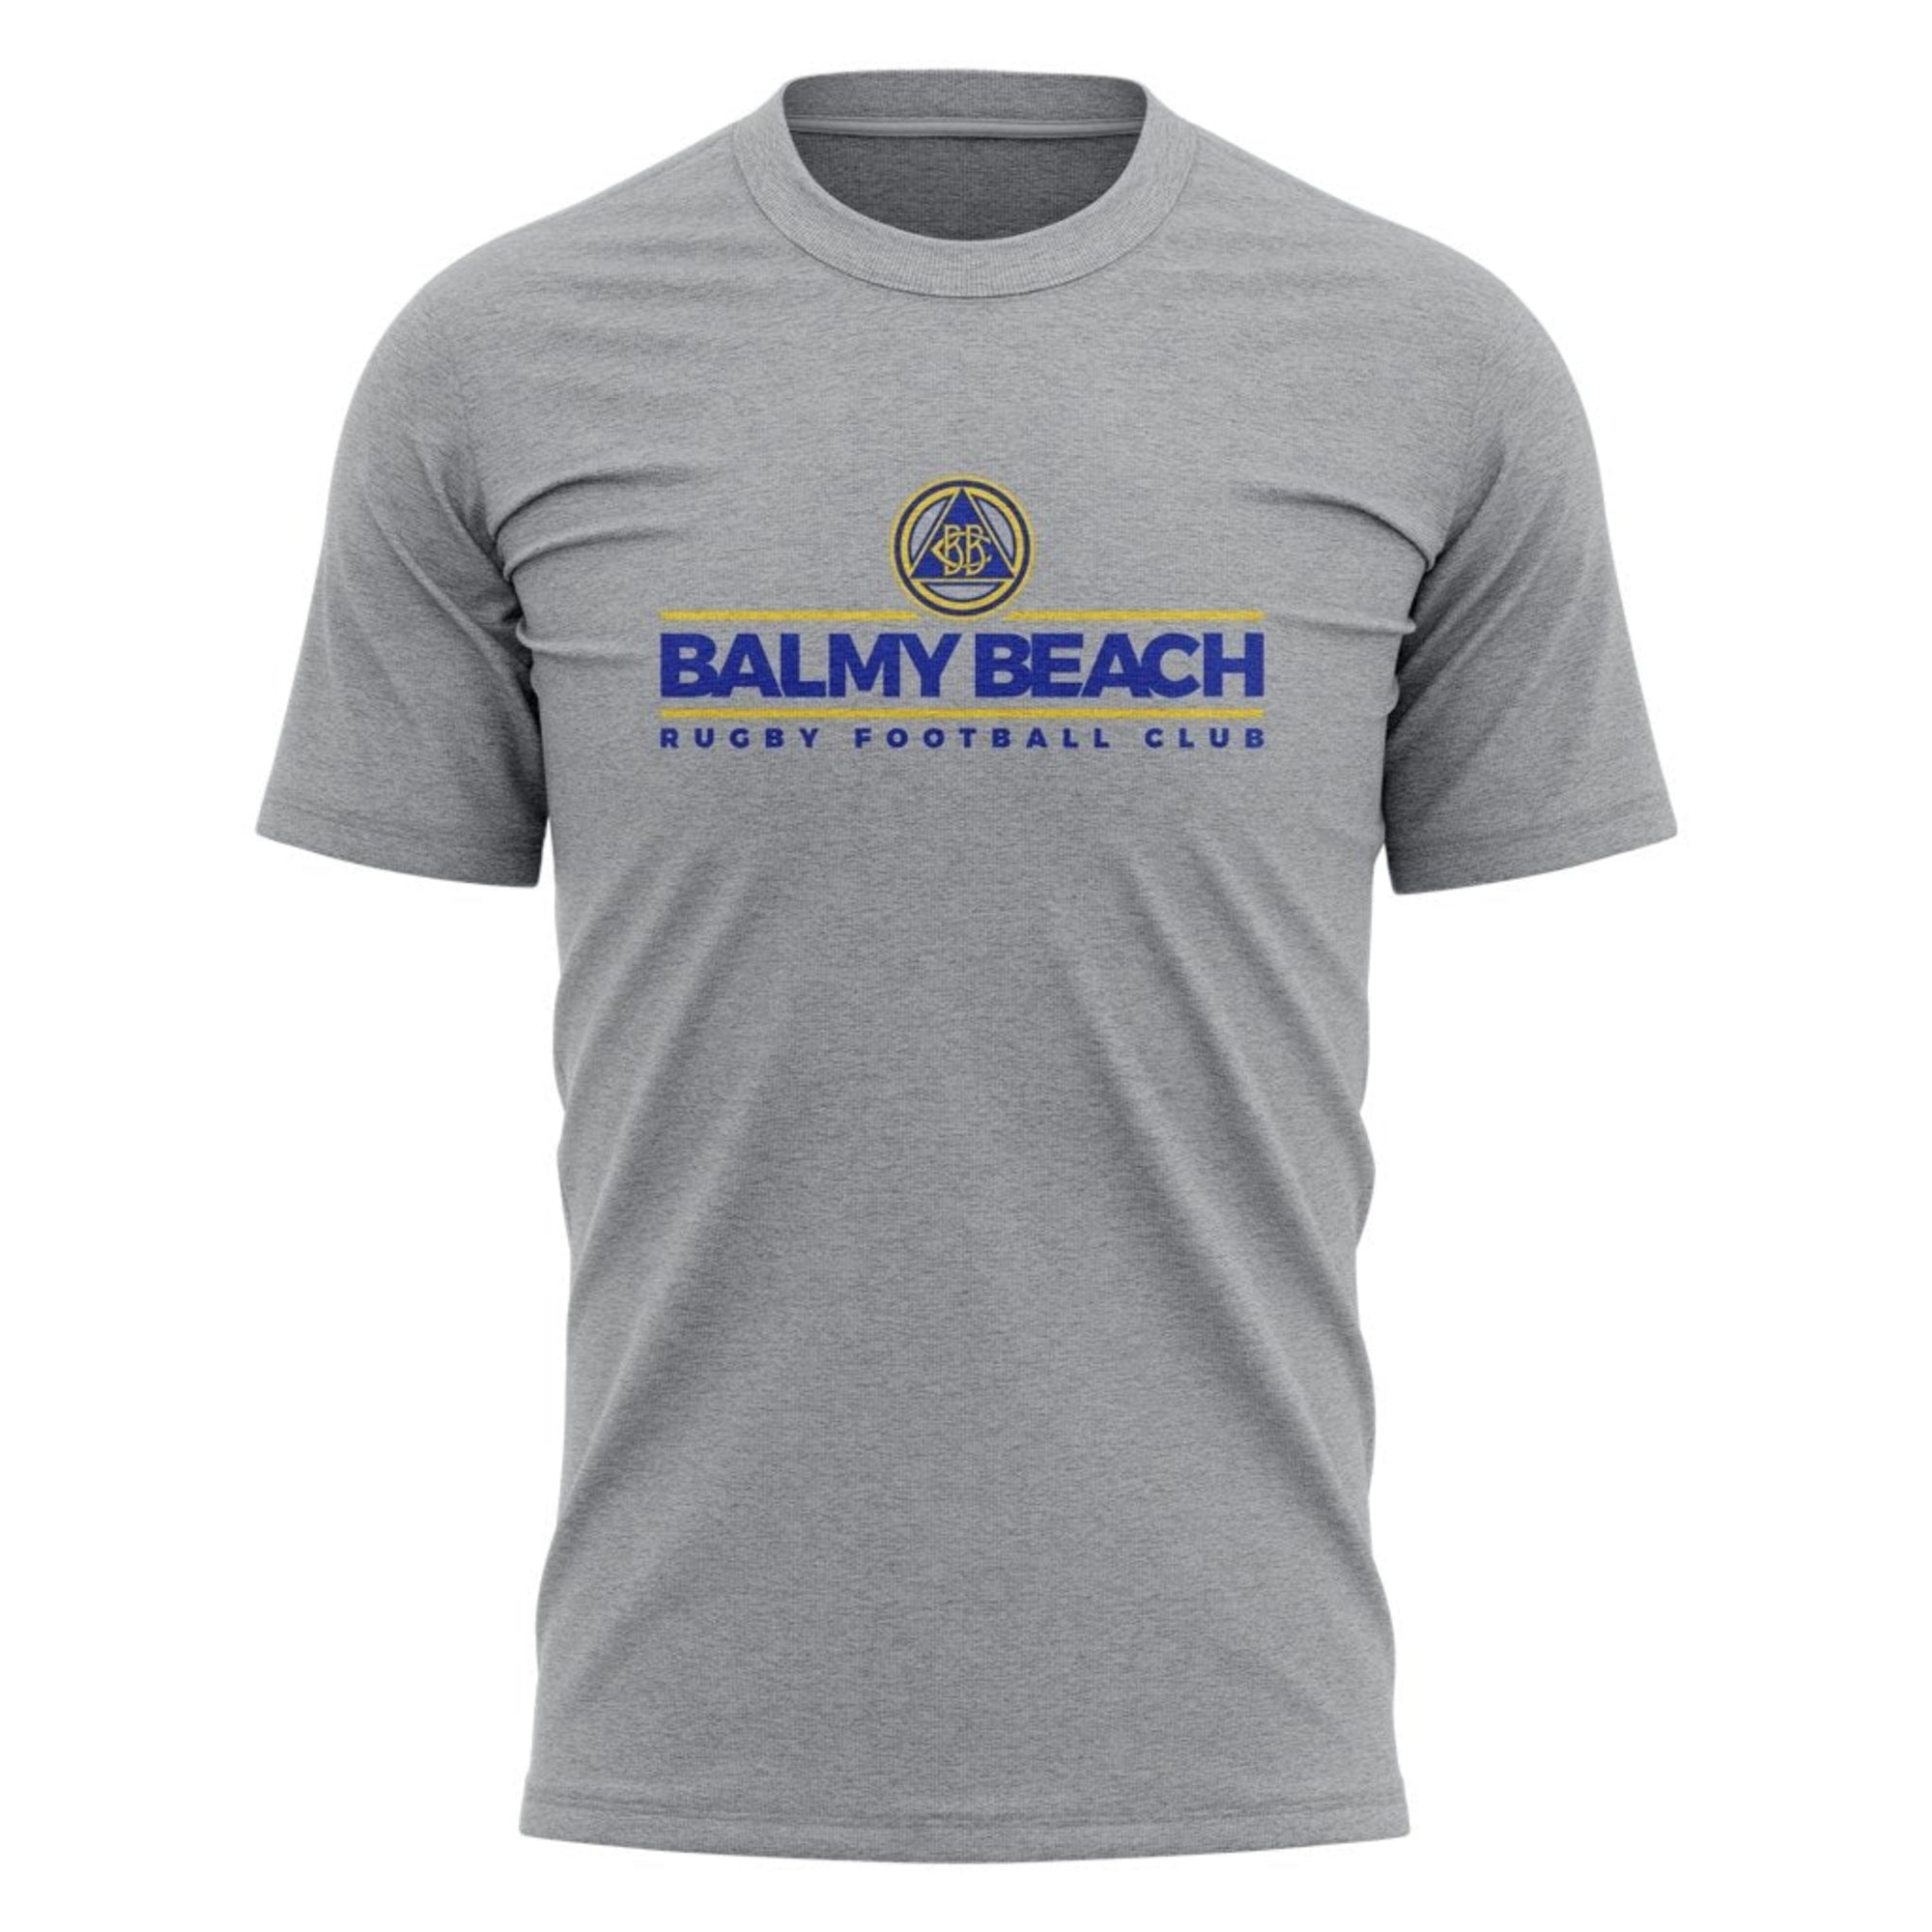 Balmy Beach "Club" Tee - Women's Sizing XS-4XL - Athletic Grey